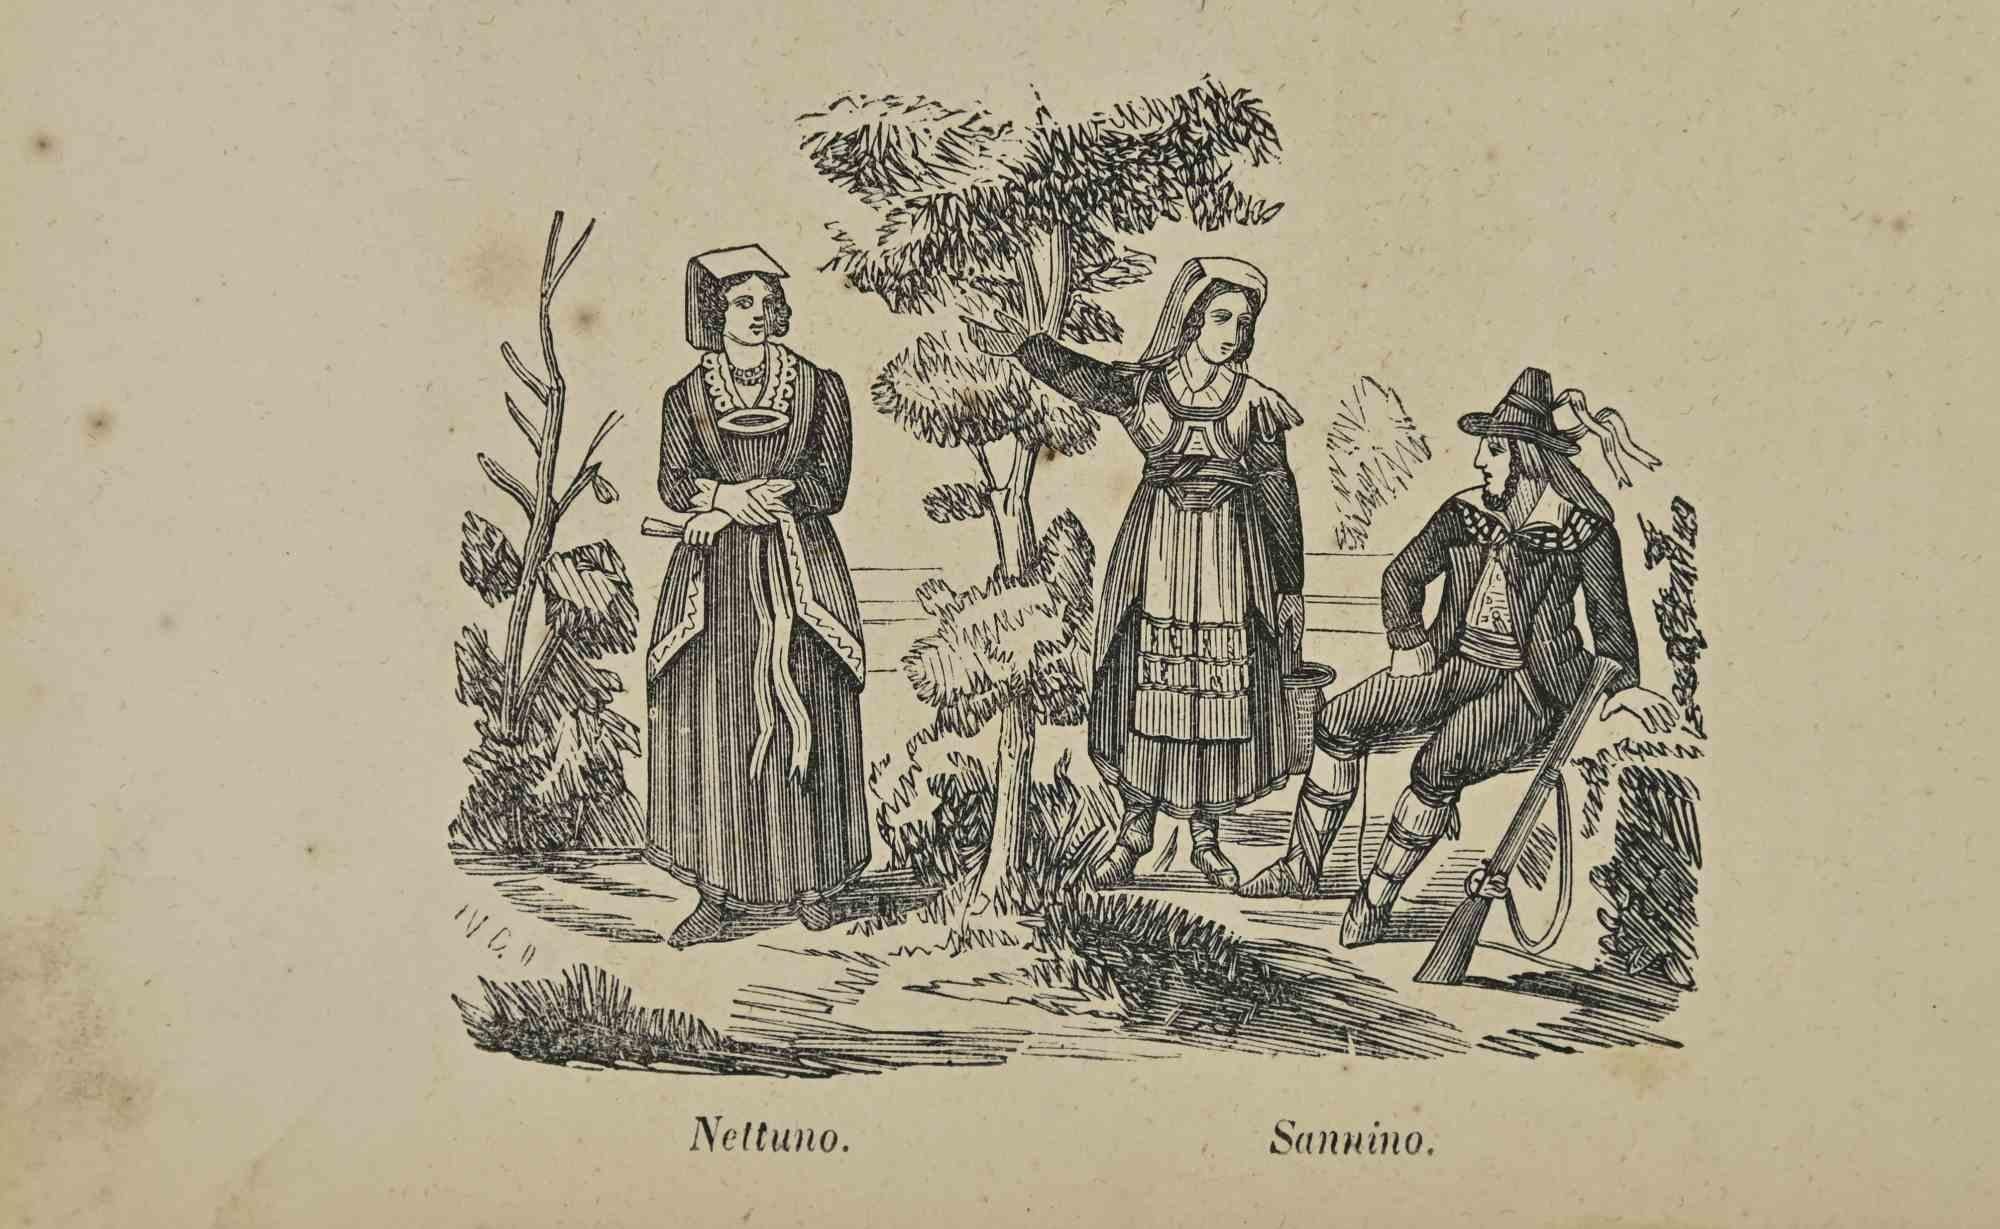 Uses and Customs - Nettuno,  Sannino -  Lithograph - 1862